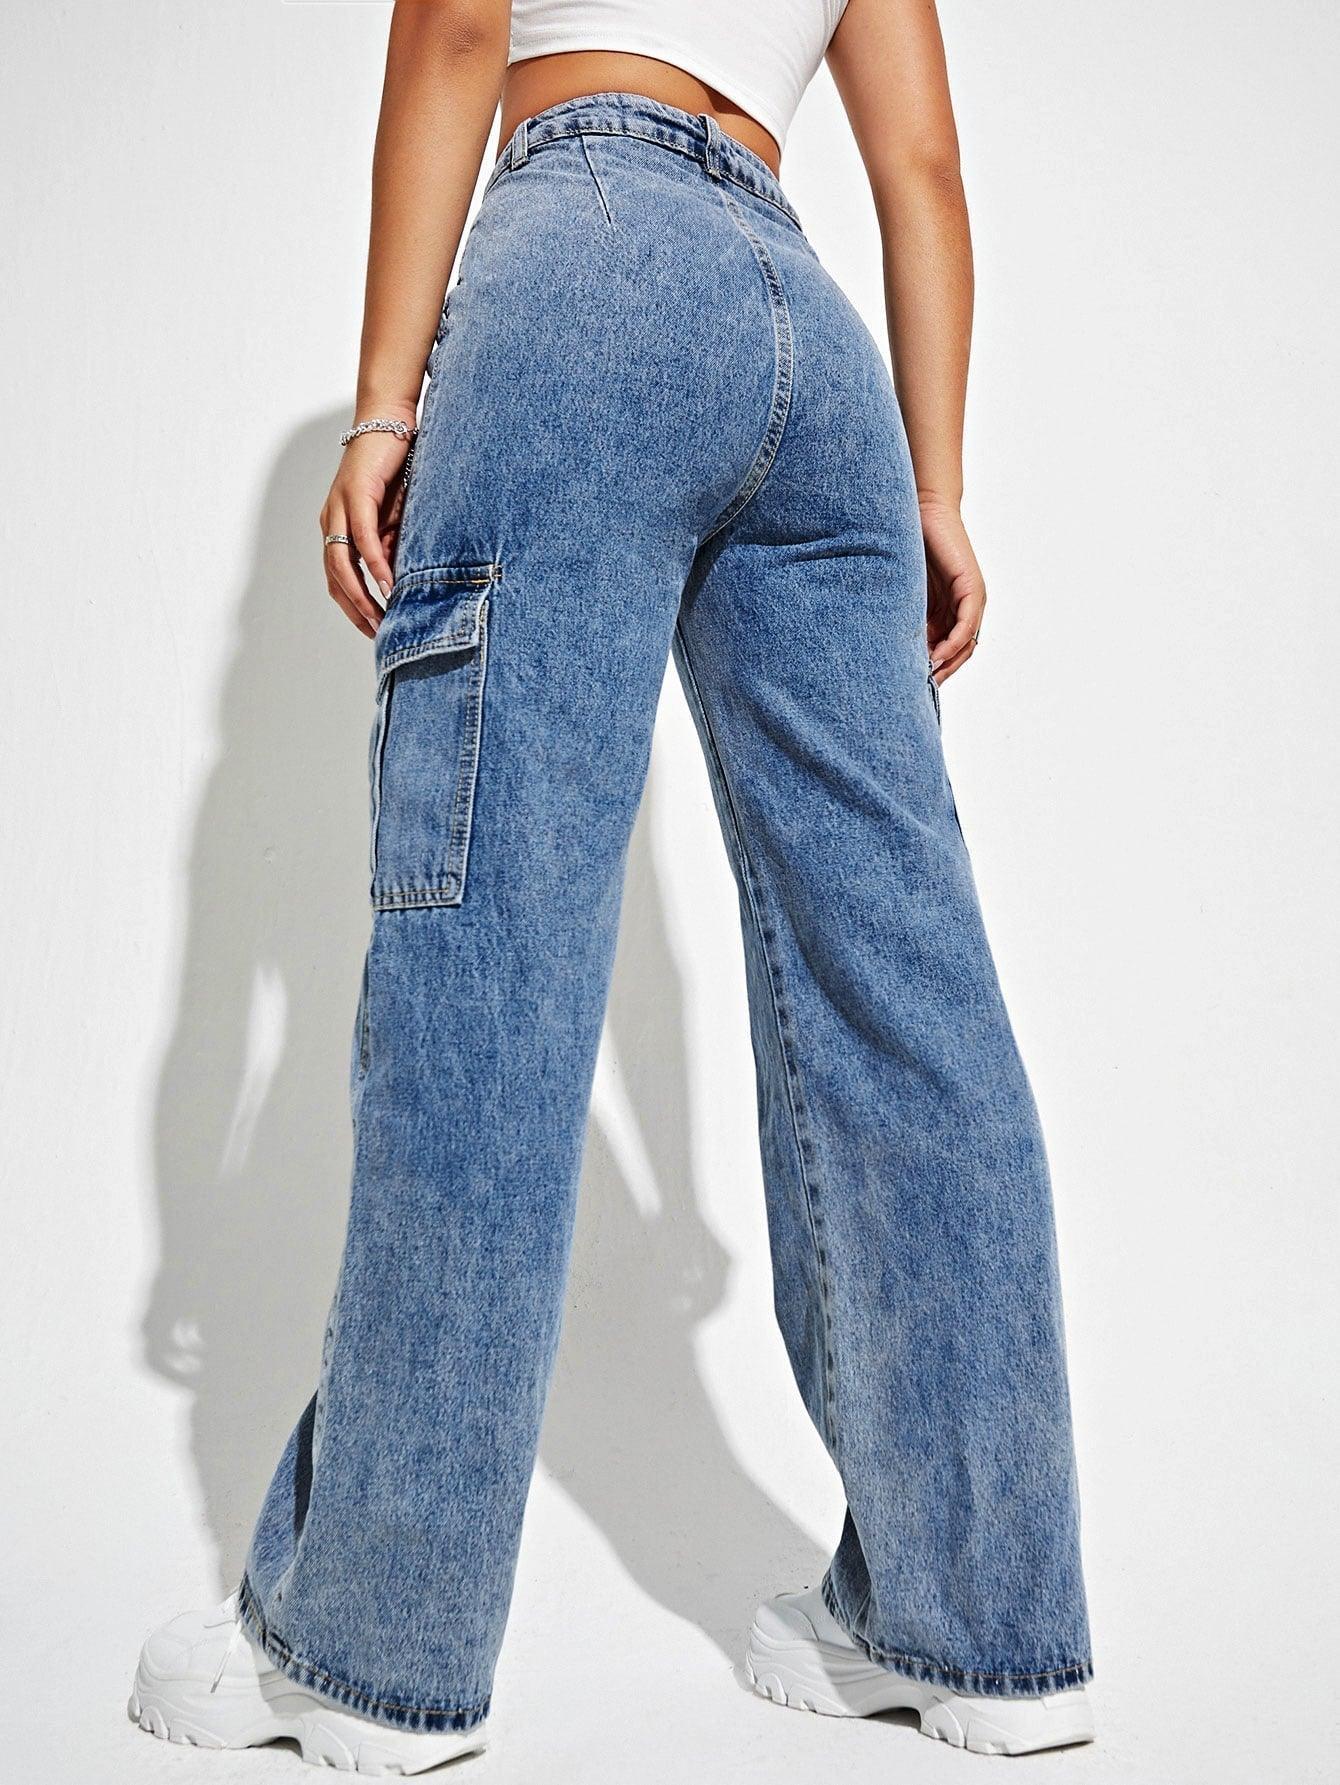 Jeans High Waist Side Cargo Flap Pocket